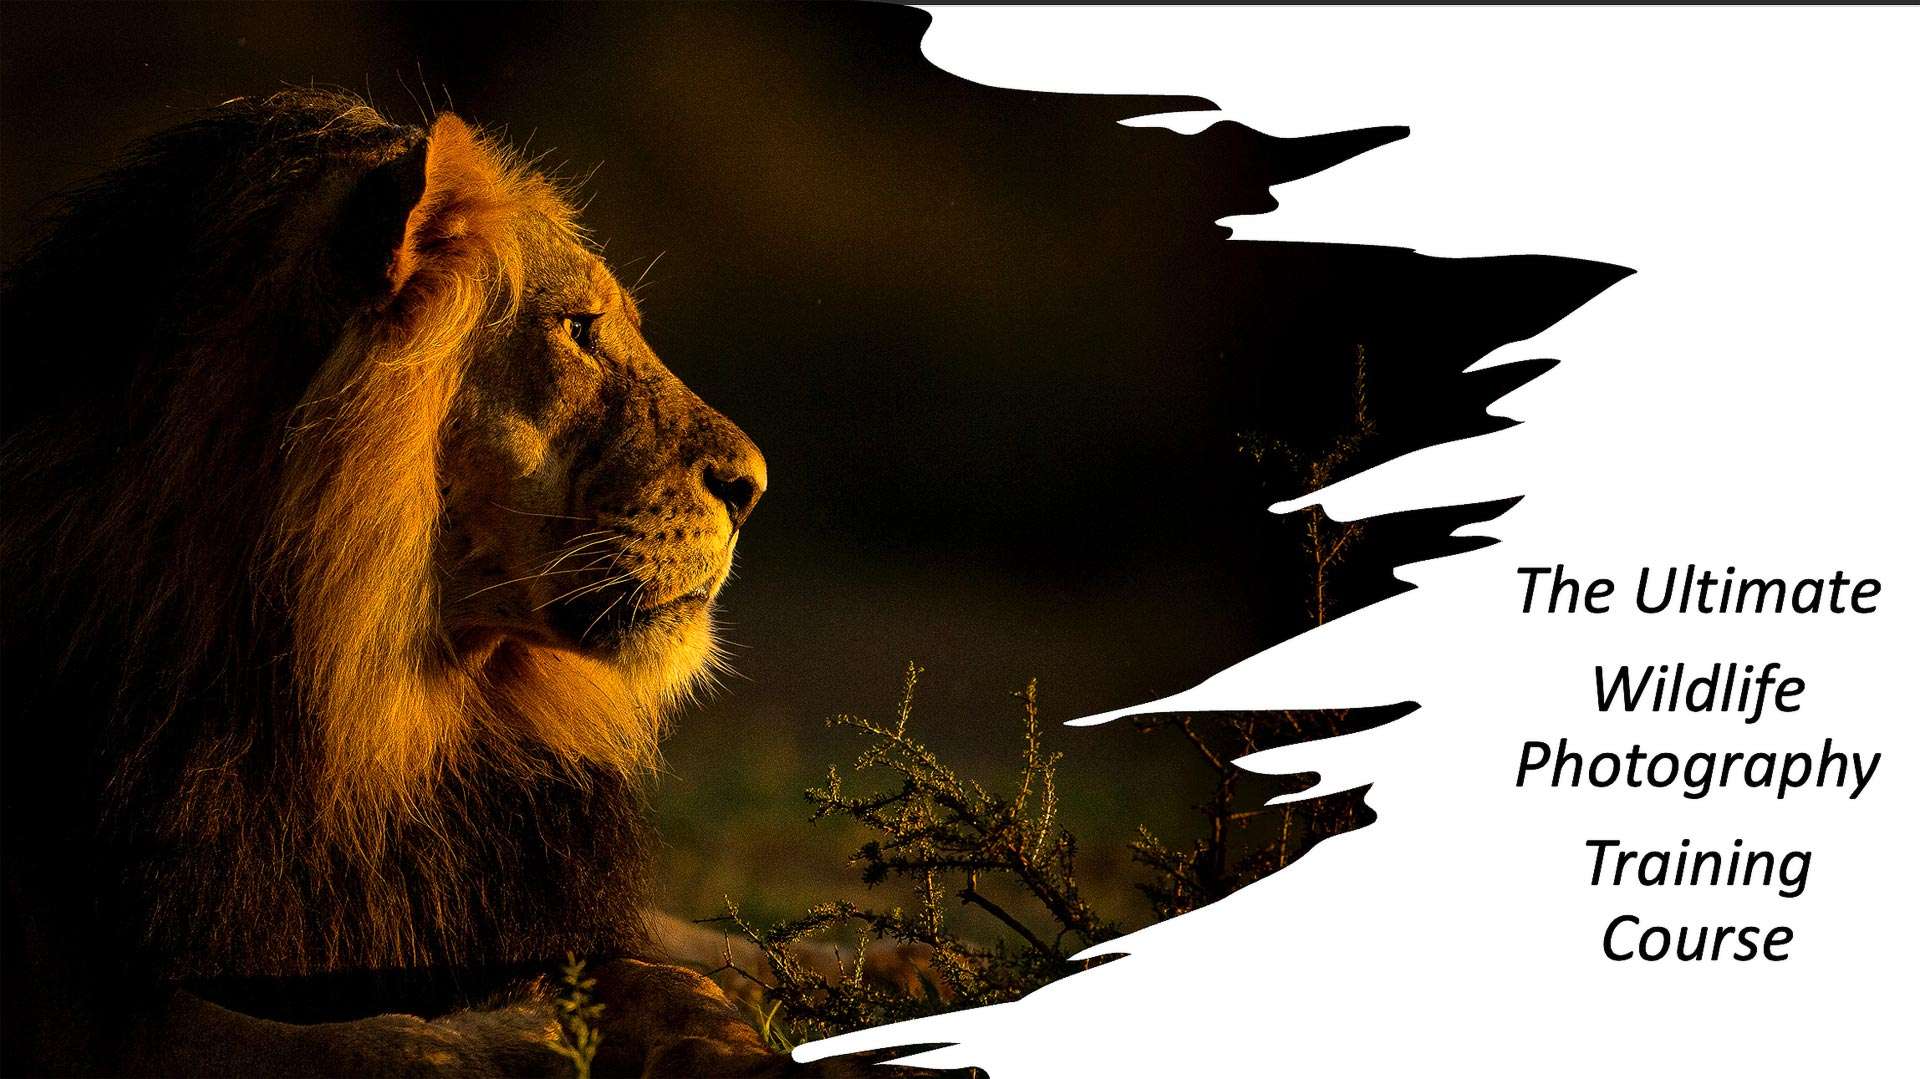 The Ultimate Wildlife Photography Training - Lion Image